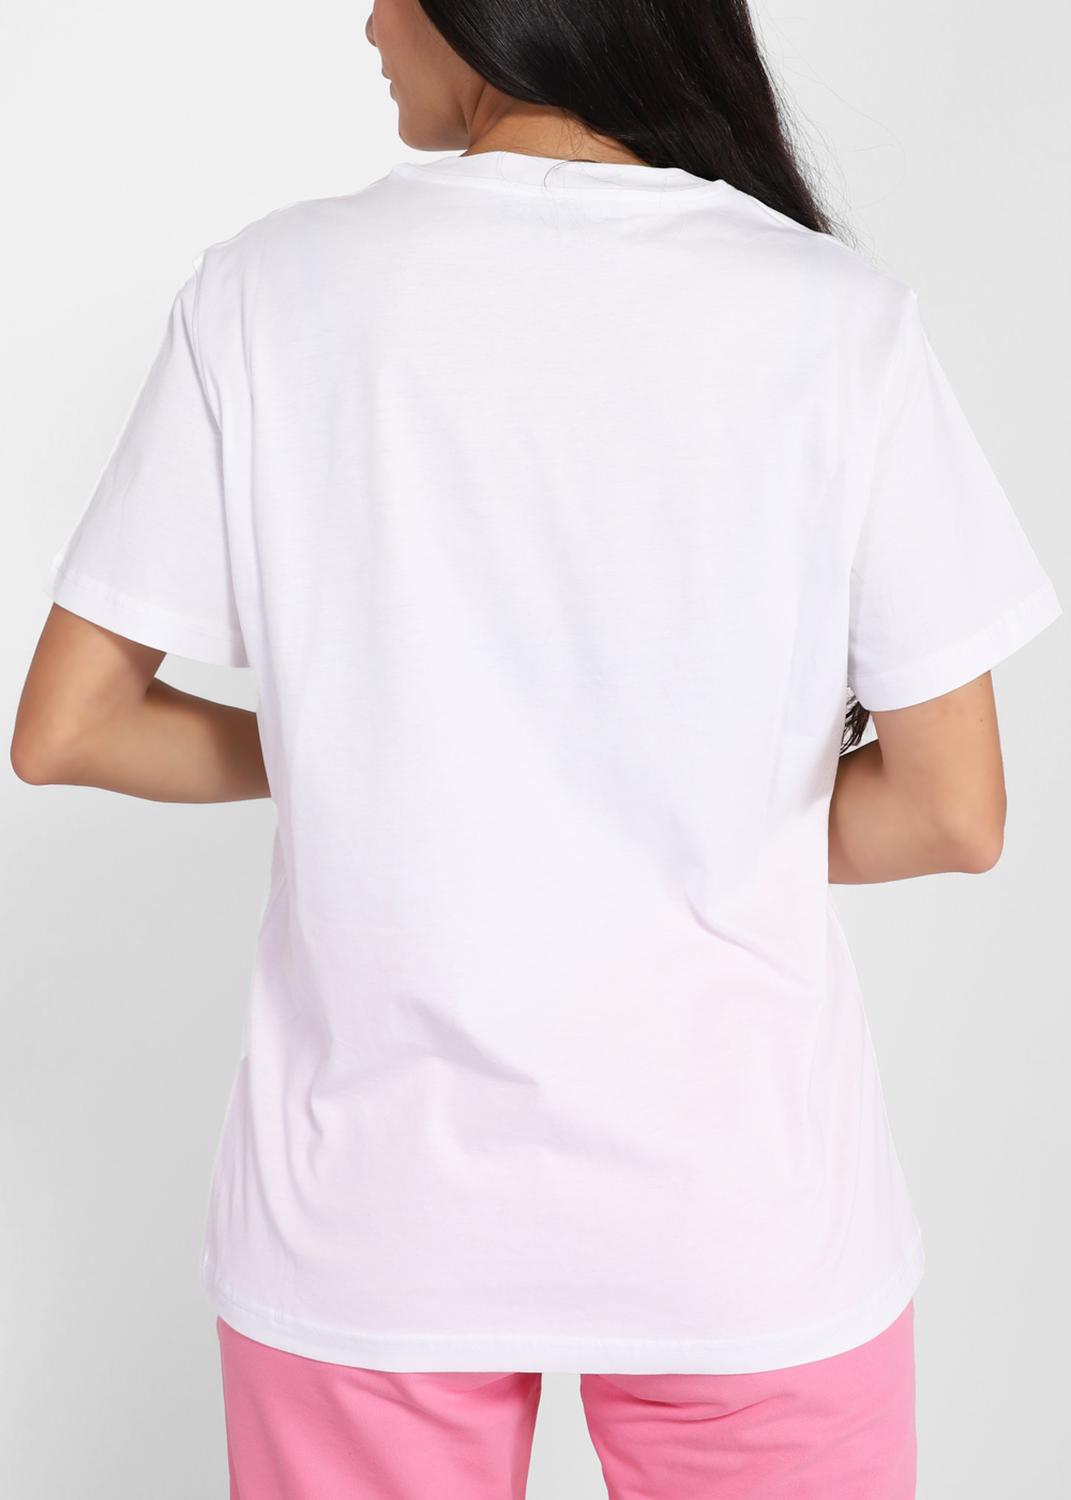 T-Shirt Moschino MSC-DA0711